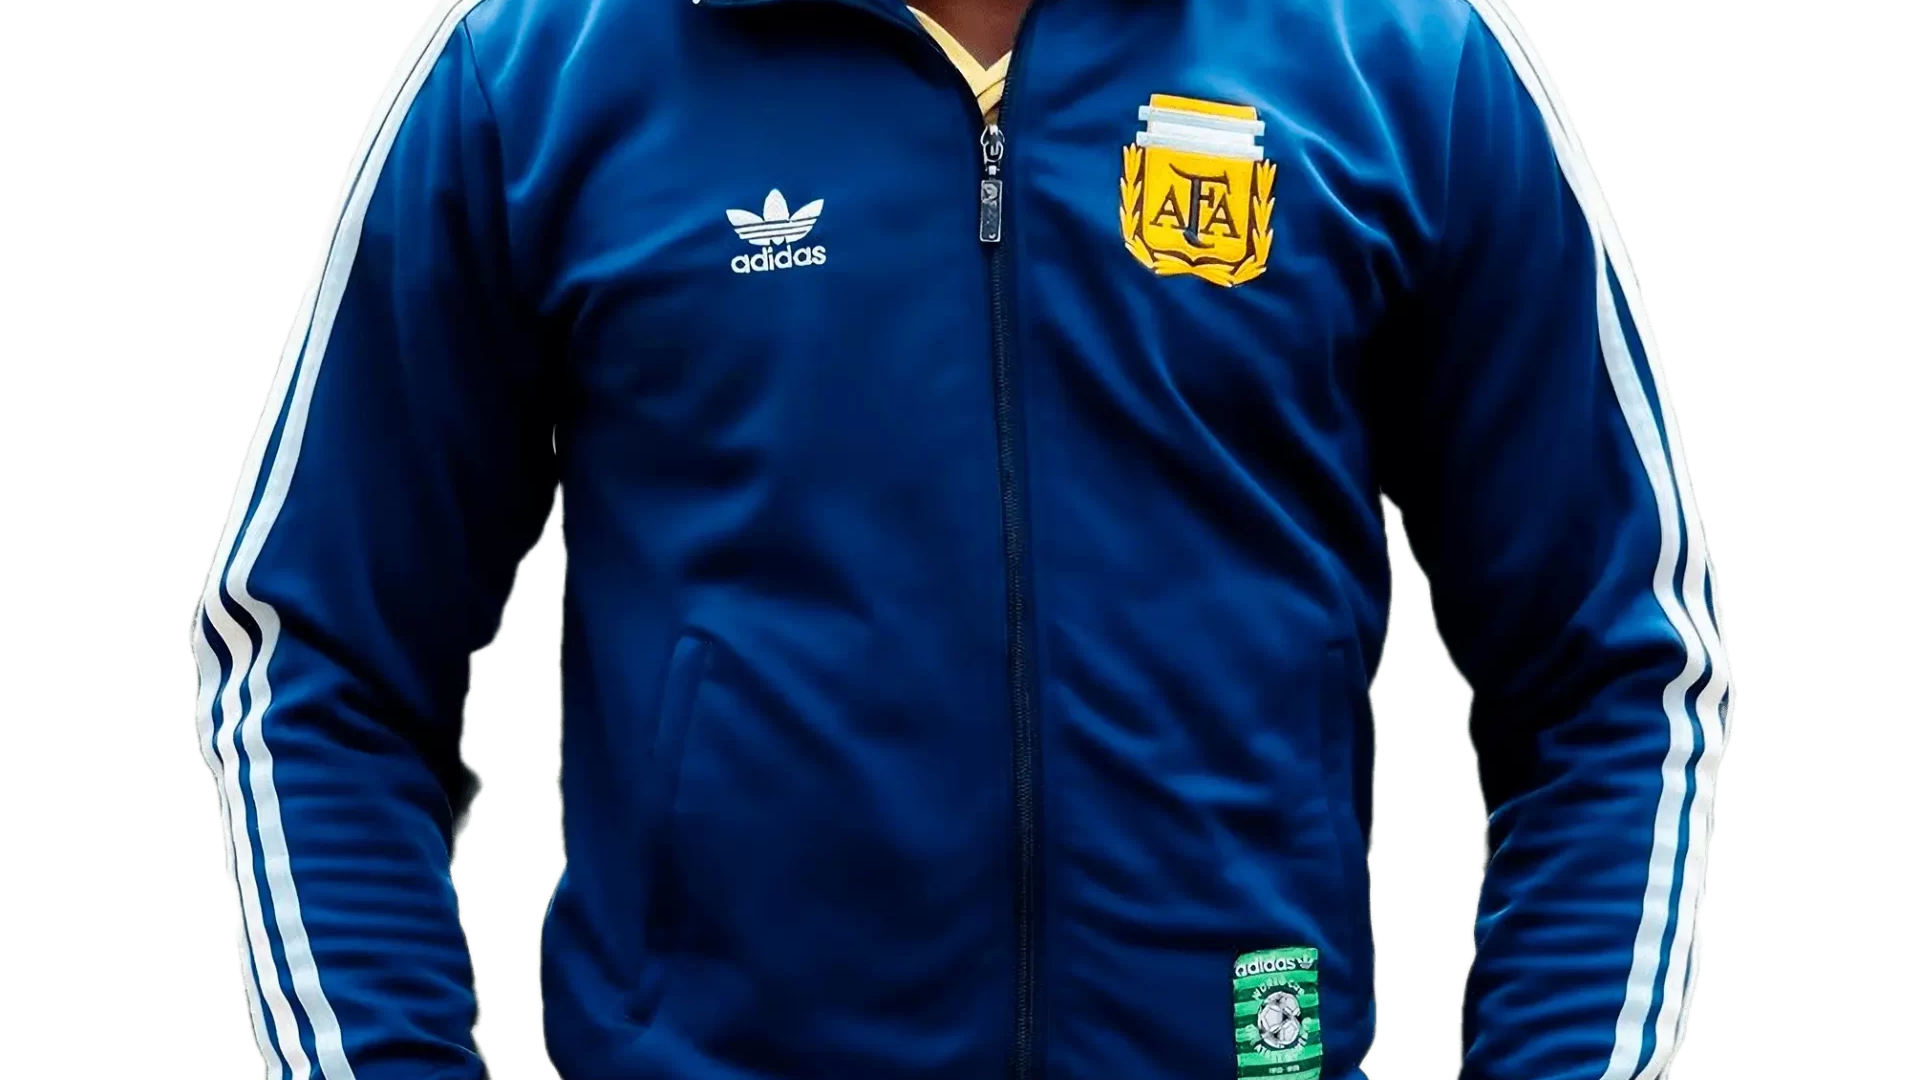 Men's 2006 Argentina '86 Hand of God TT by Adidas: Soaring (EnLawded.com file #lmchk67260ip2y123826kg9st)